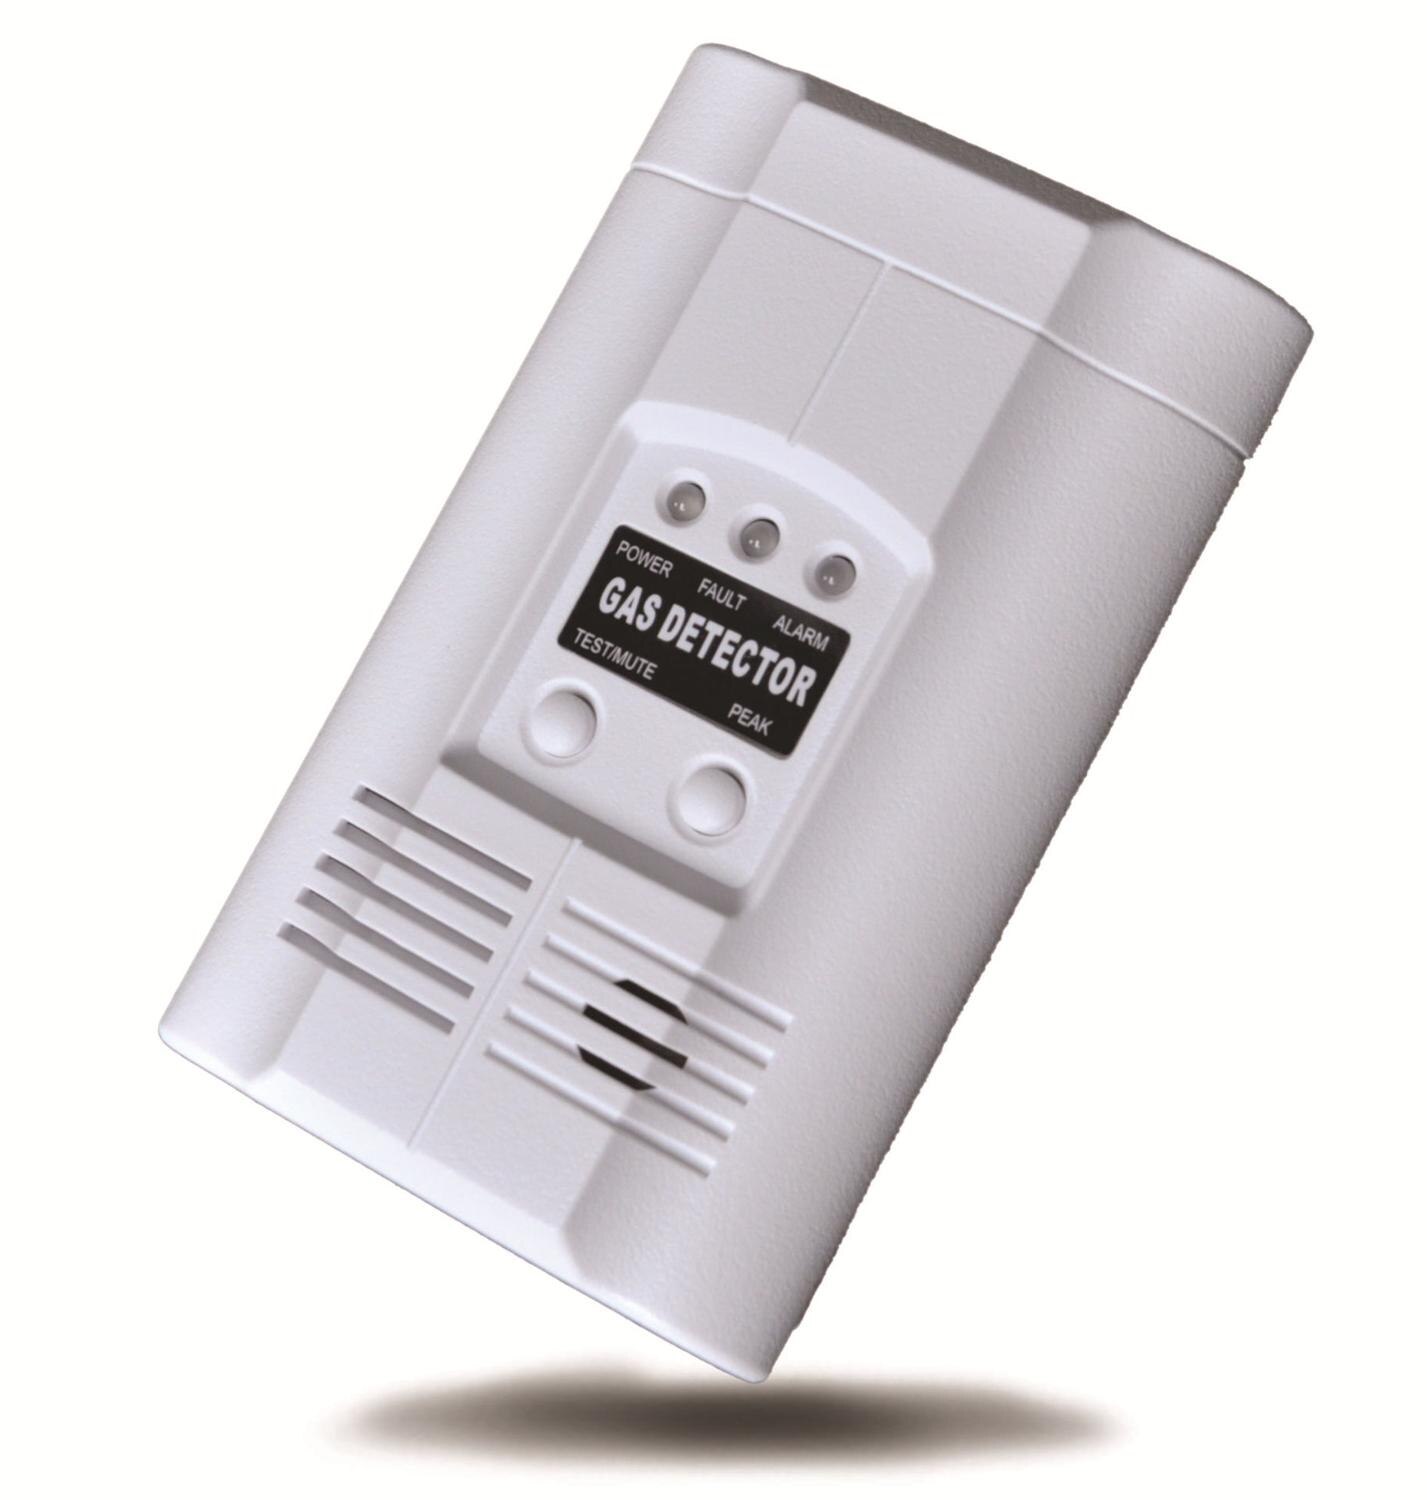 Detektor for gas kulilte analysator co-detektor kohlenmonoxid kulilte advarsel allerme fuga gas kuldioxid indendørs sensor